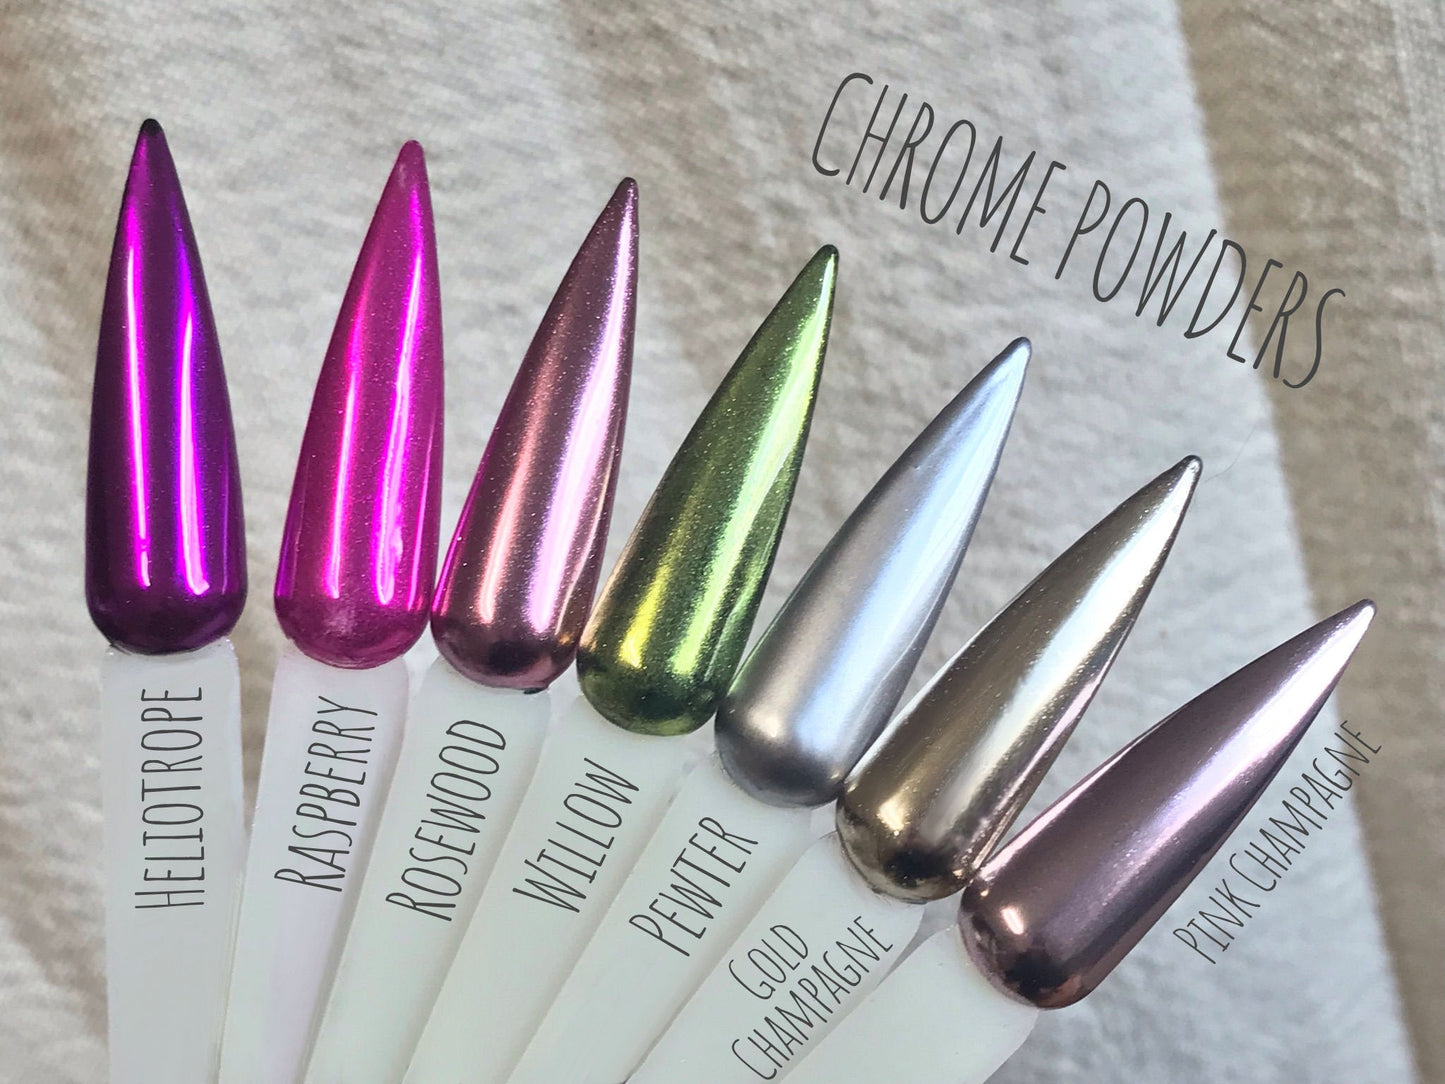 Chrome Nail Powders 9 Color Set